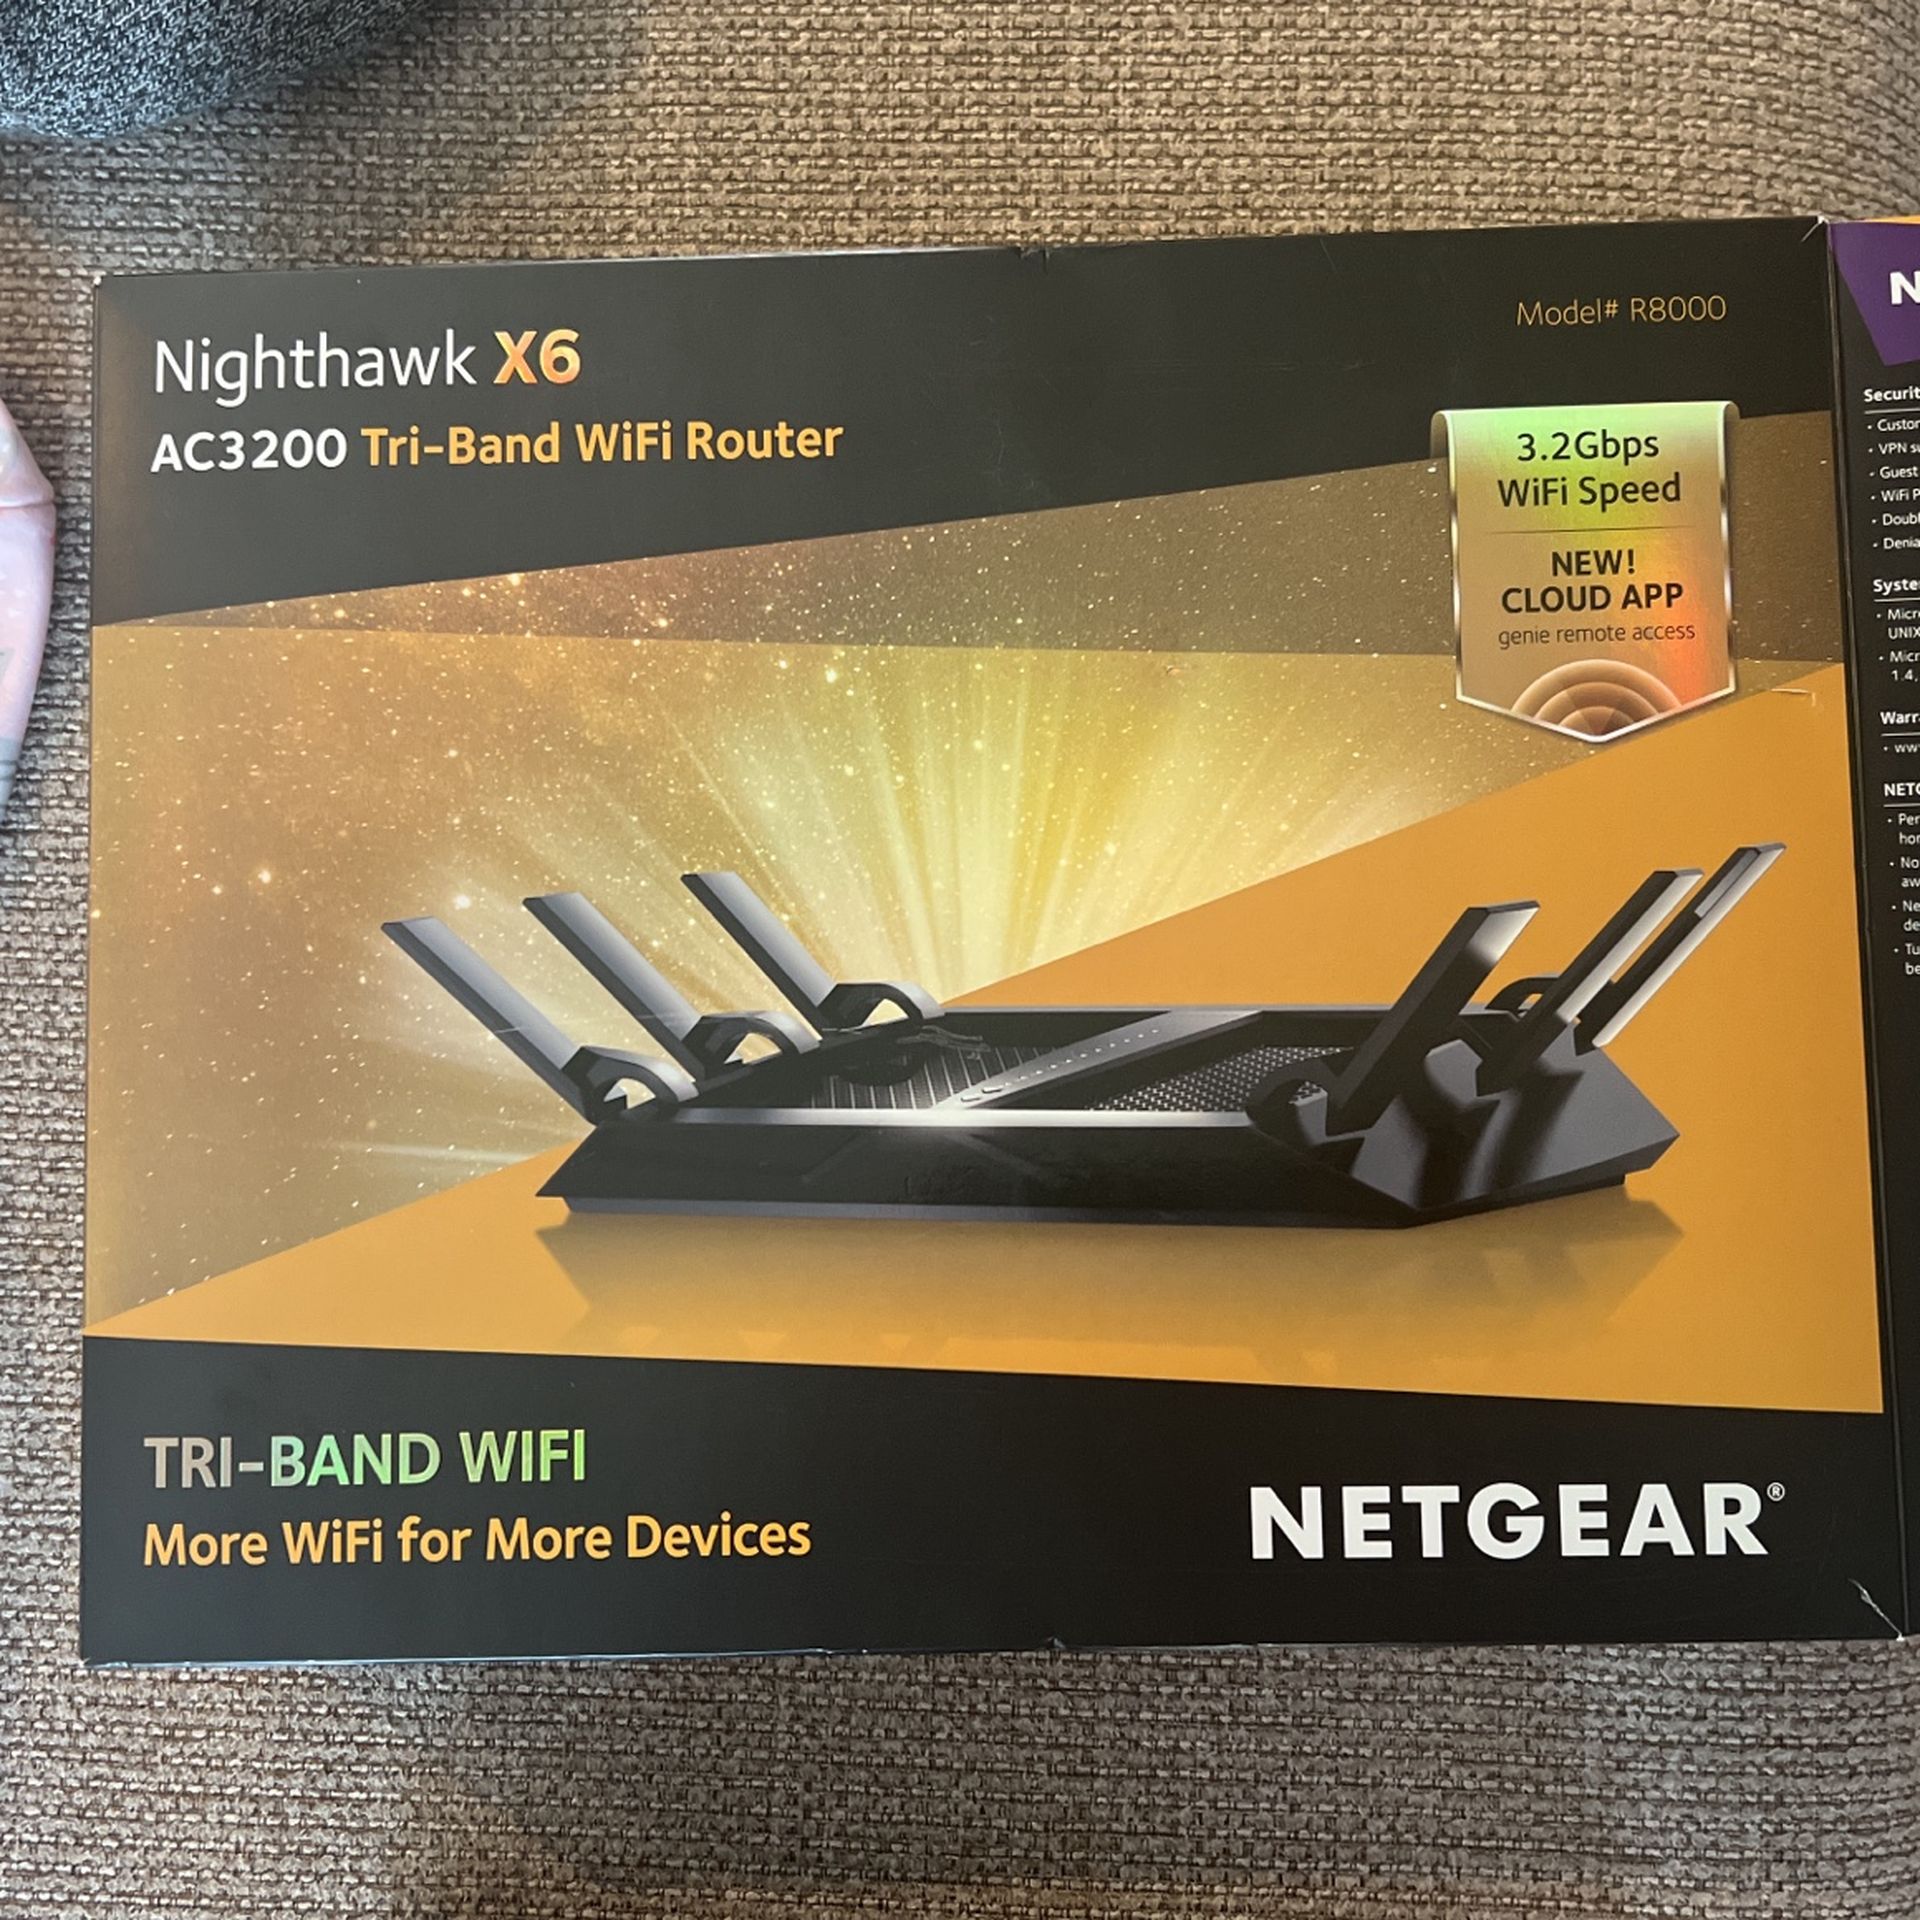 Netgear Nighthawk X6 AC3200 WiFi Router